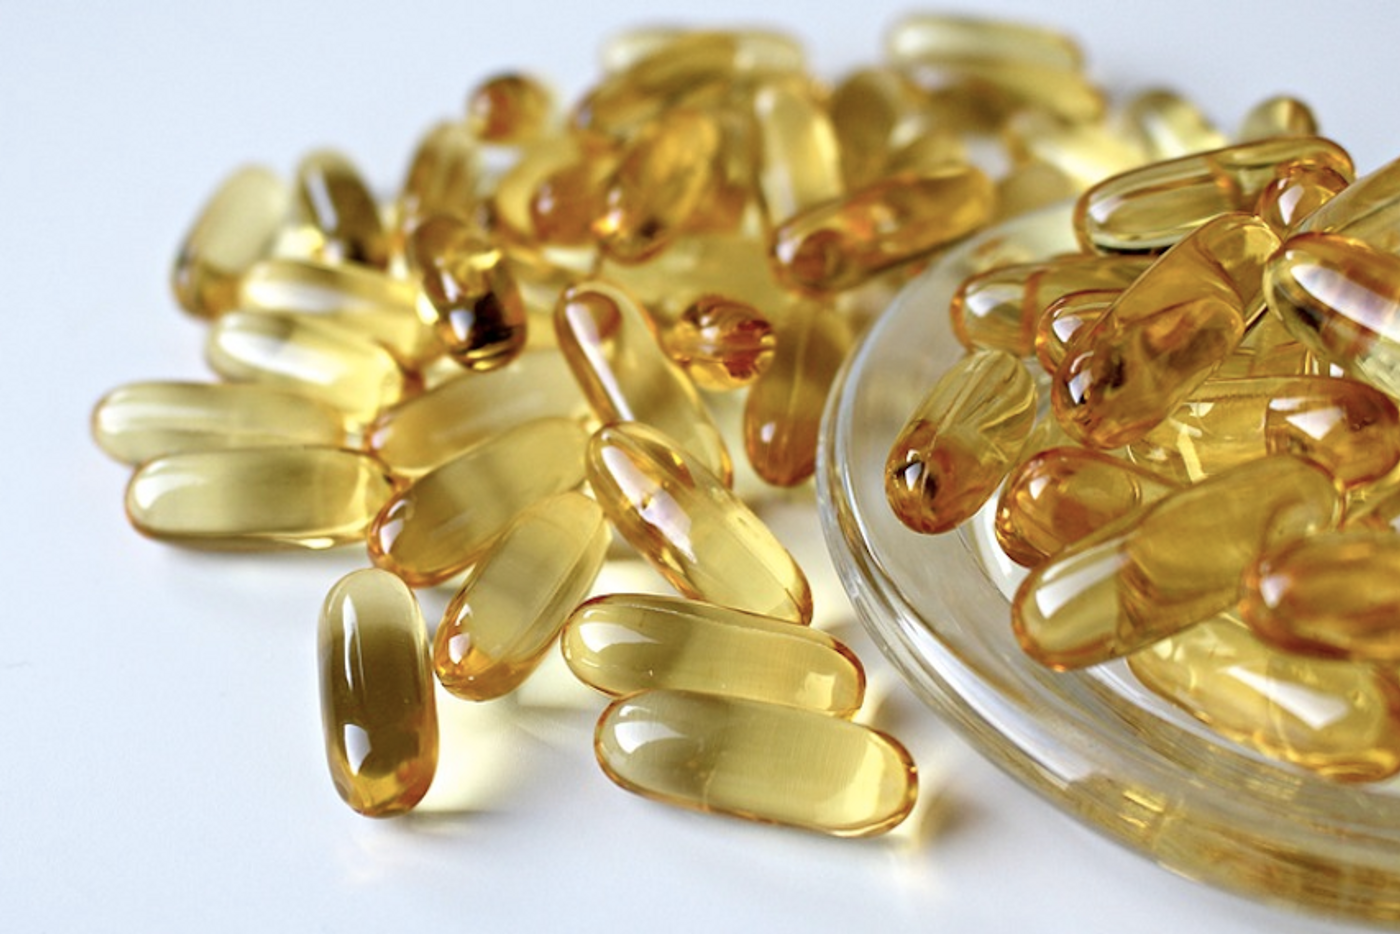 Fish oil supplements / Credit: Pixabay